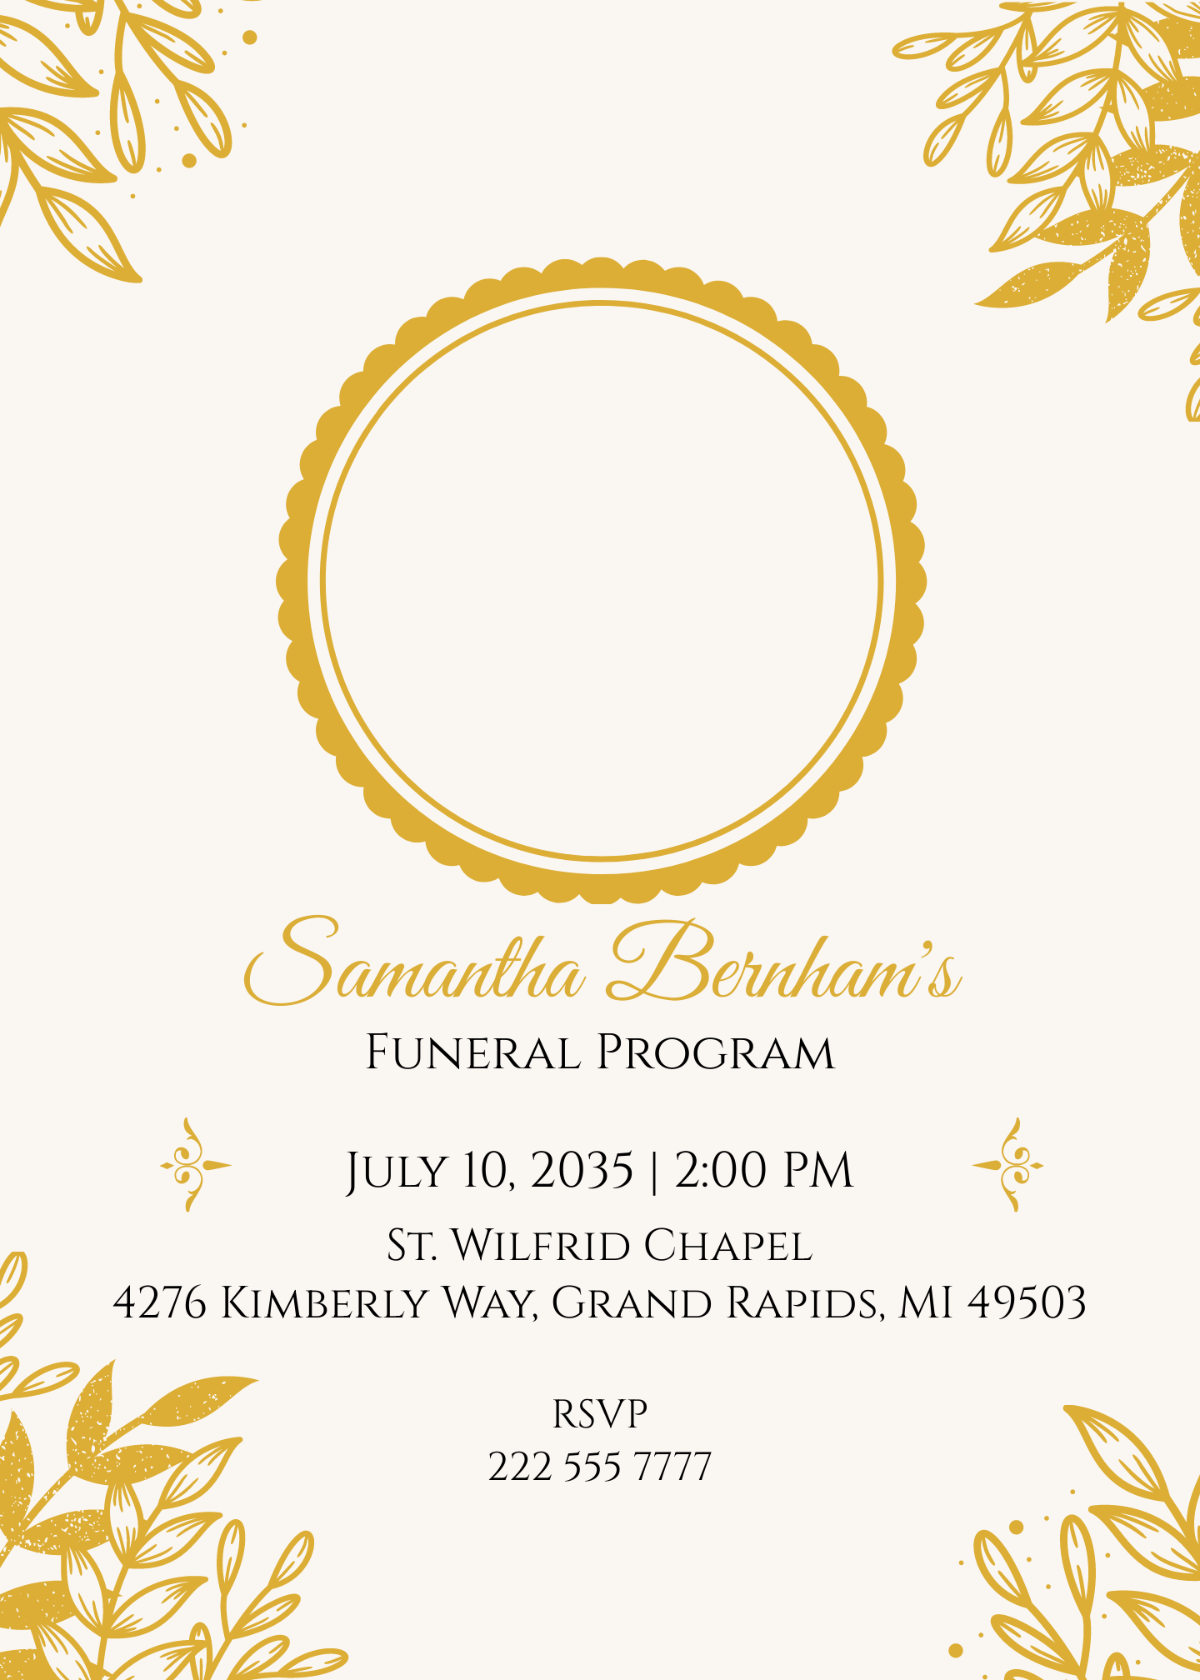 Funeral Program Invitation Template